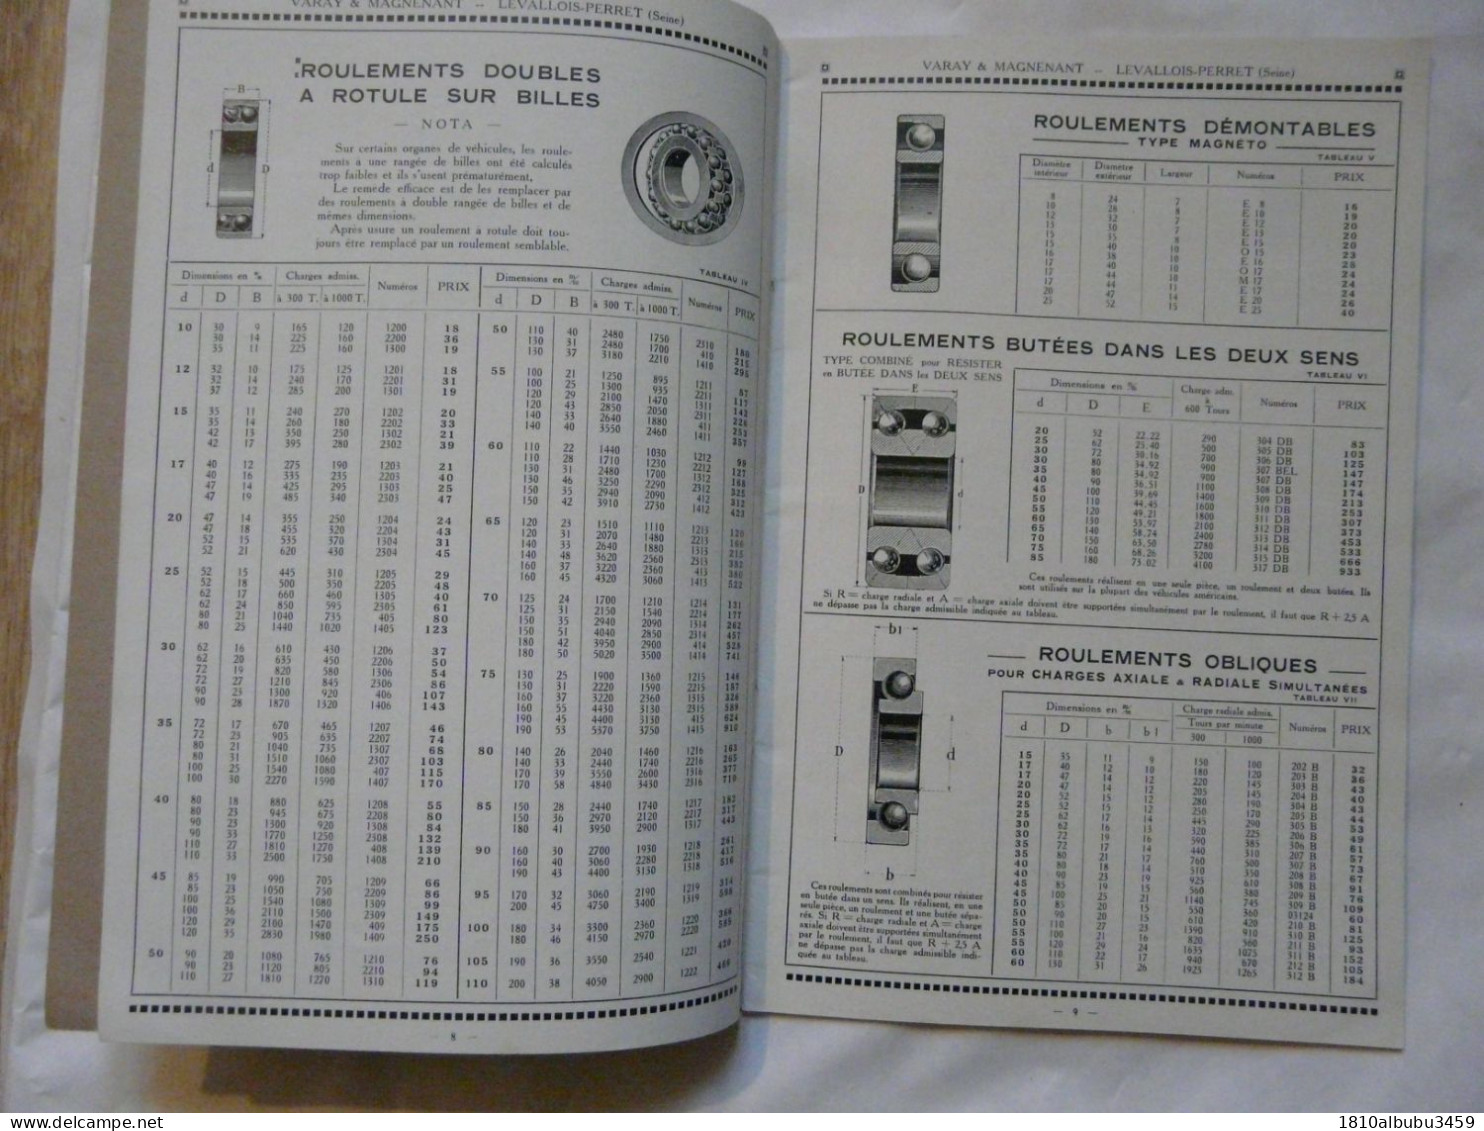 CATALOGUE - SPECIALITES MECANIQUE DE PRECISION : CV - Janvier 1931 - Bricolage / Tecnica